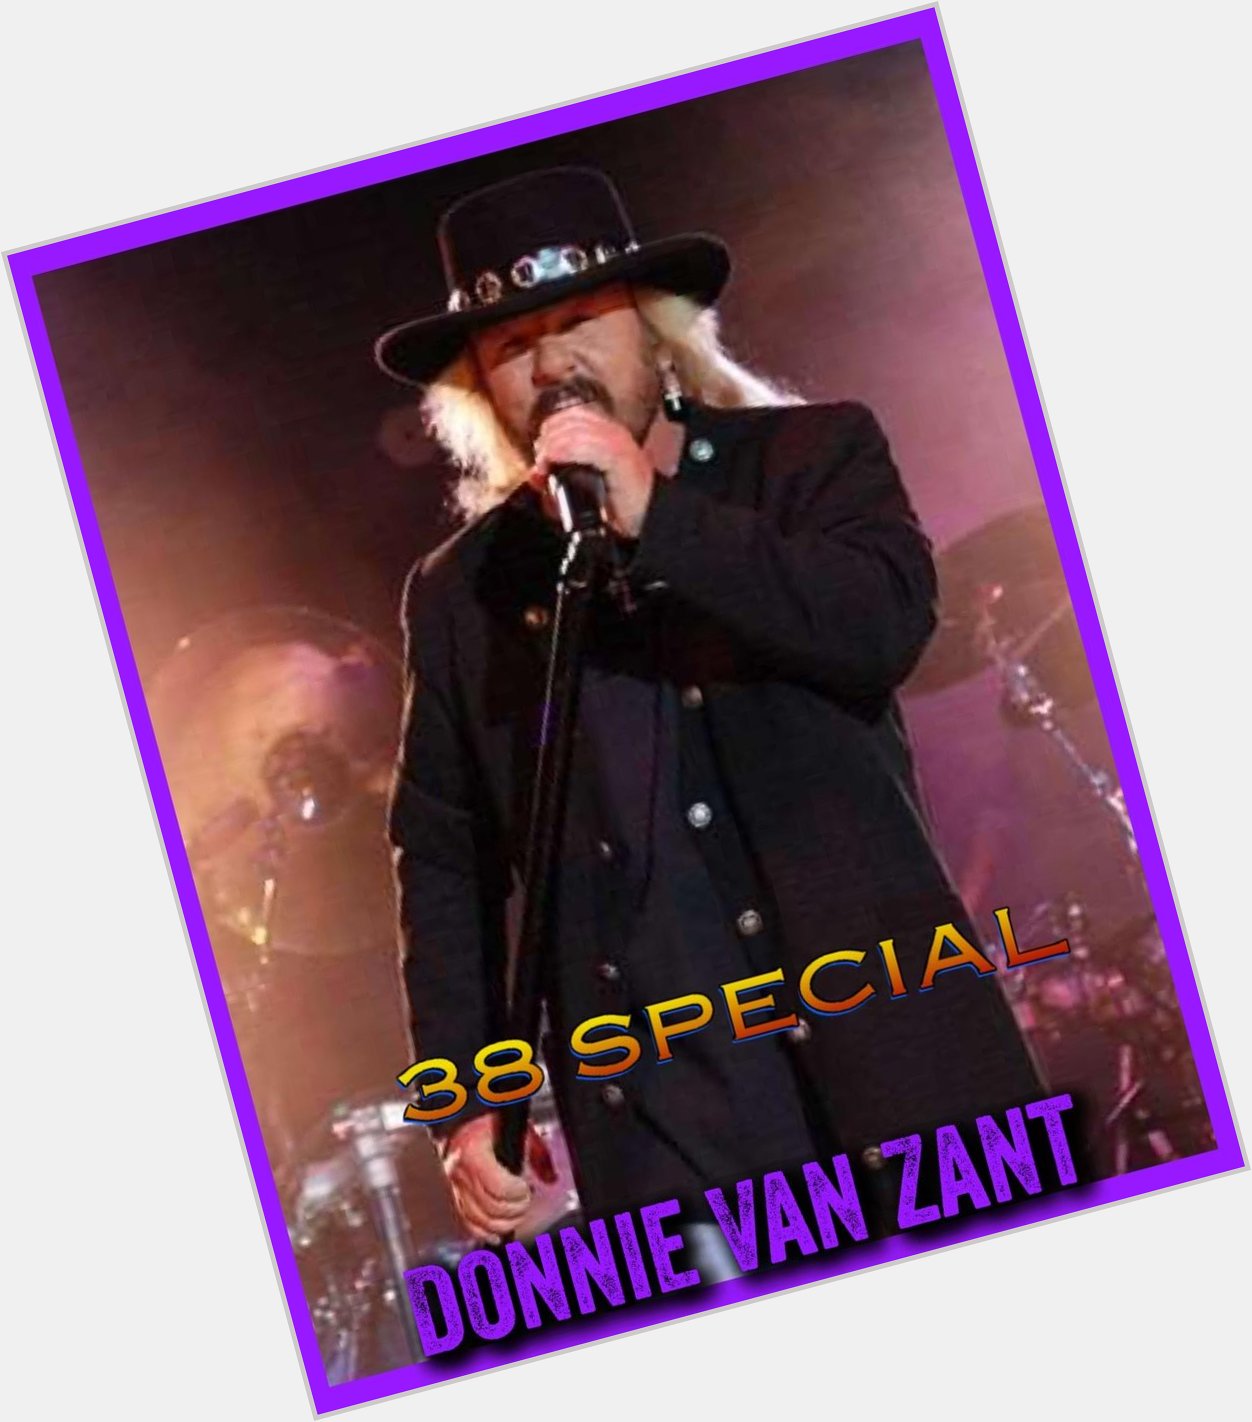 Happy Birthday Donnie Van Zant
Lead singer/guitarist .38 Special
June 11, 1952 Jacksonville, Florida 